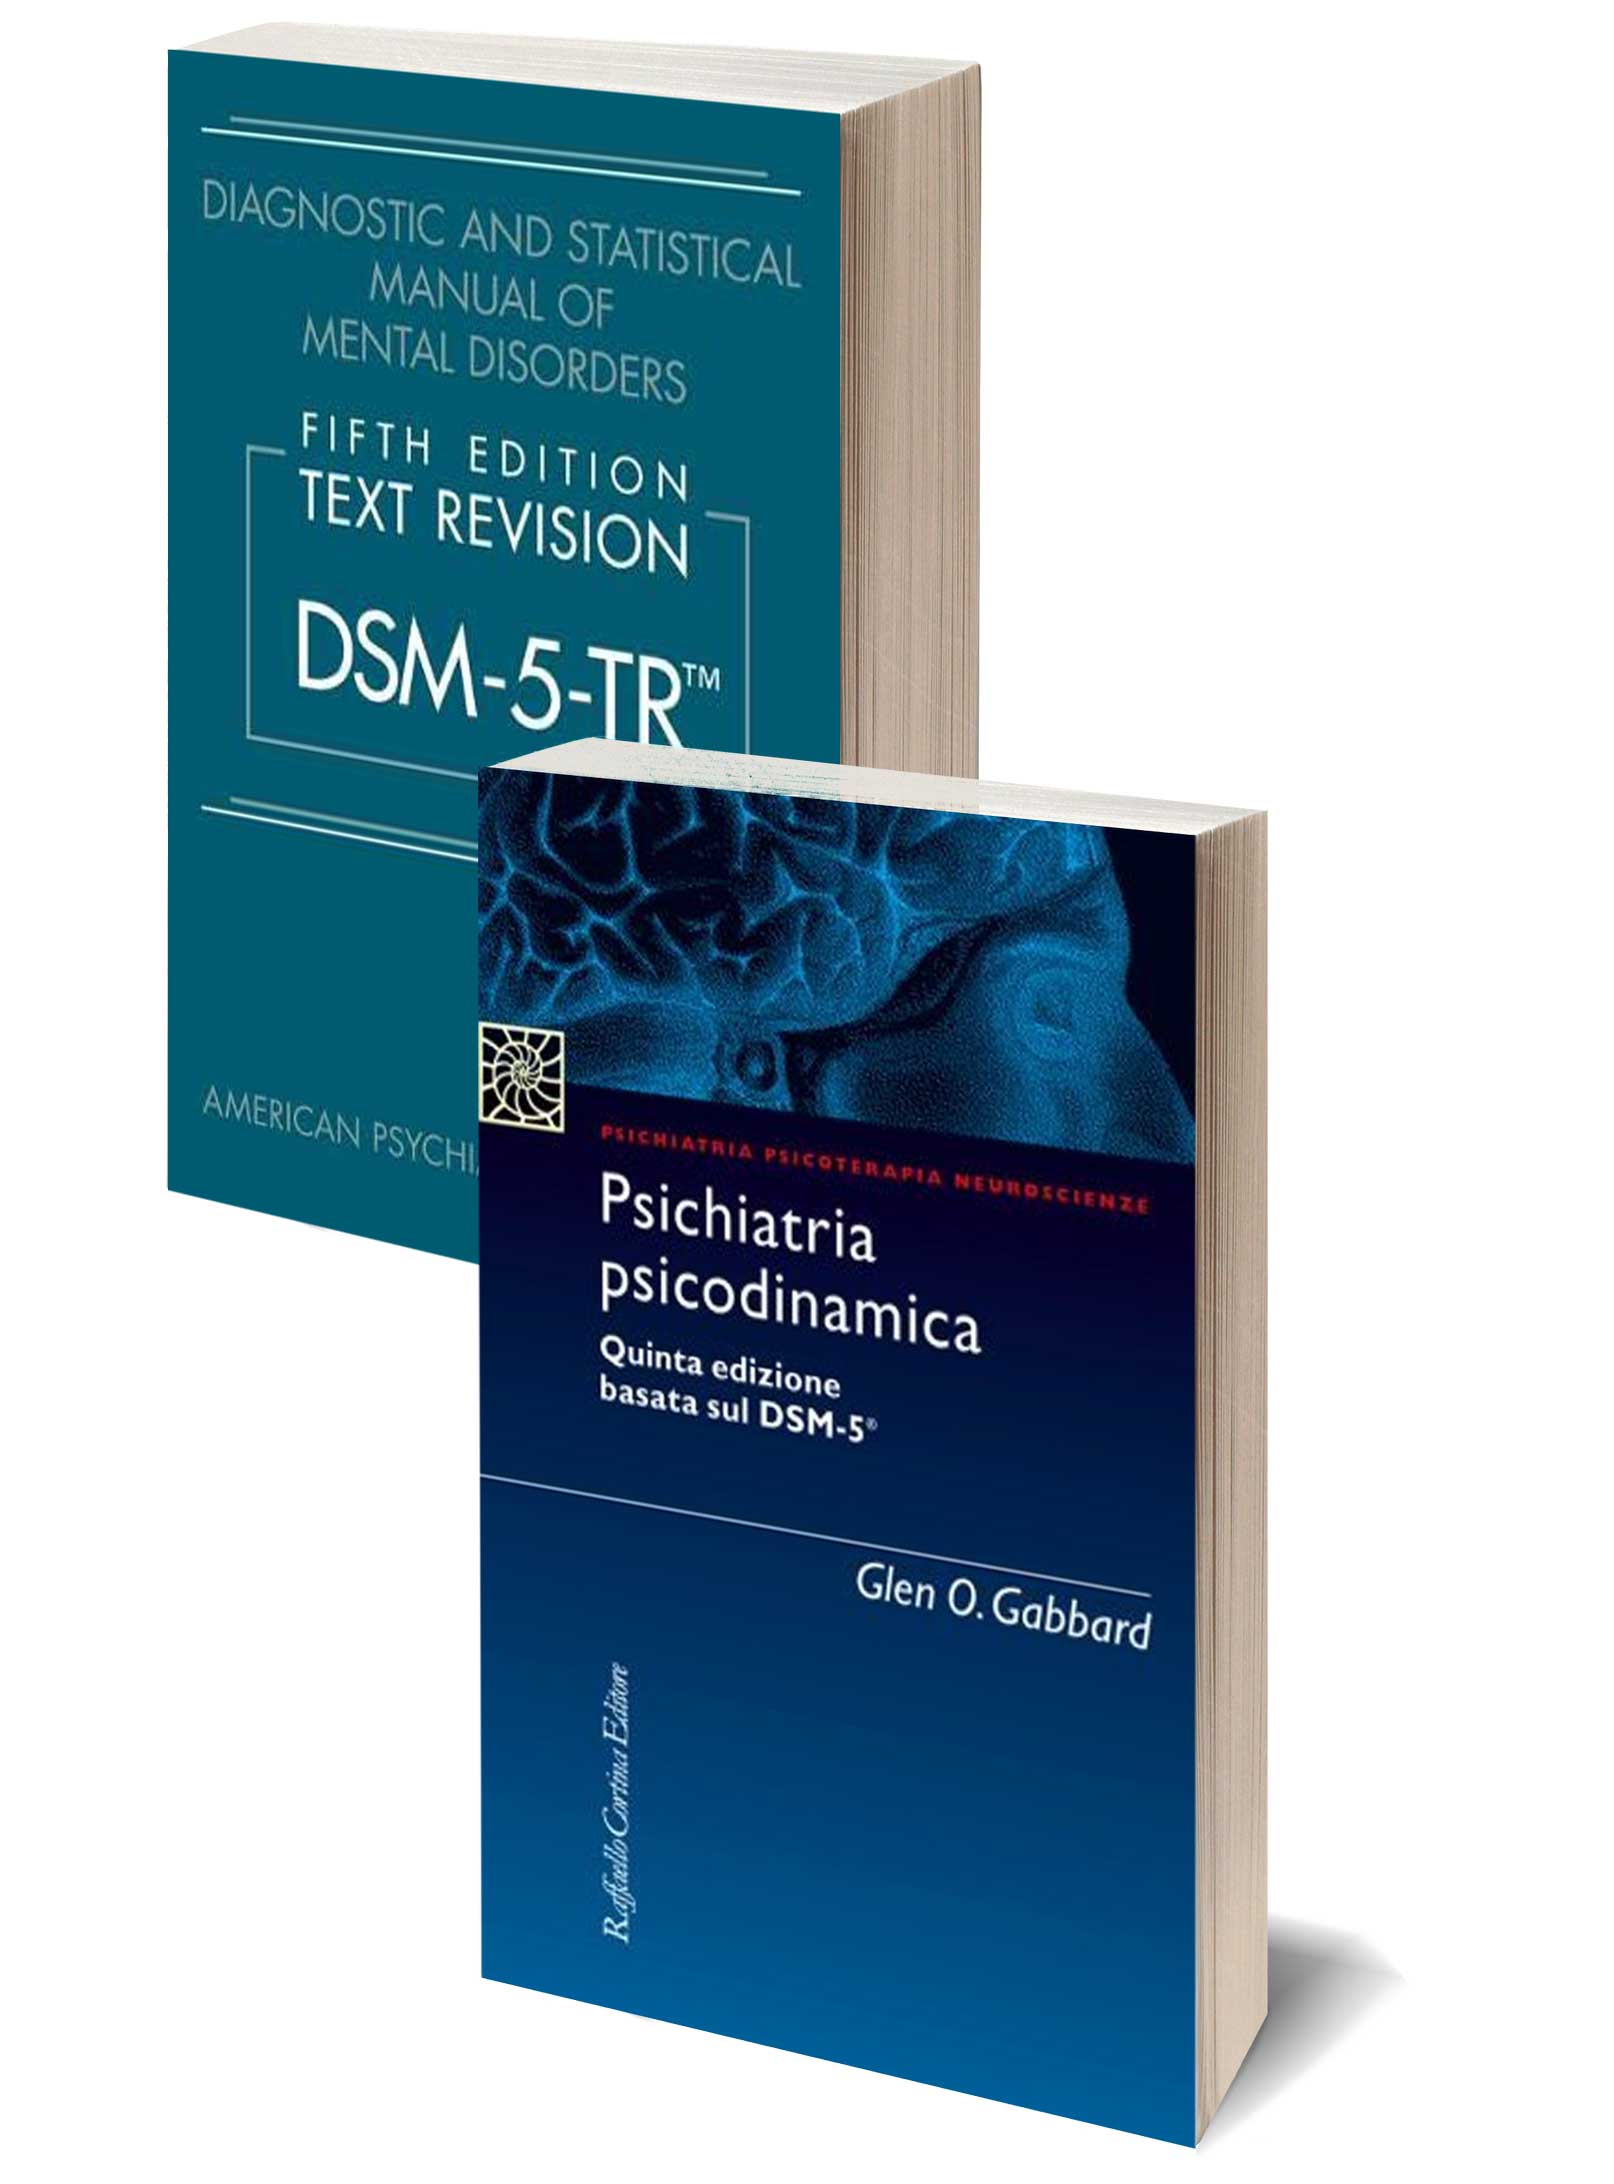 DSM-5-TR Text Revision + Psichiatria psicodinamica